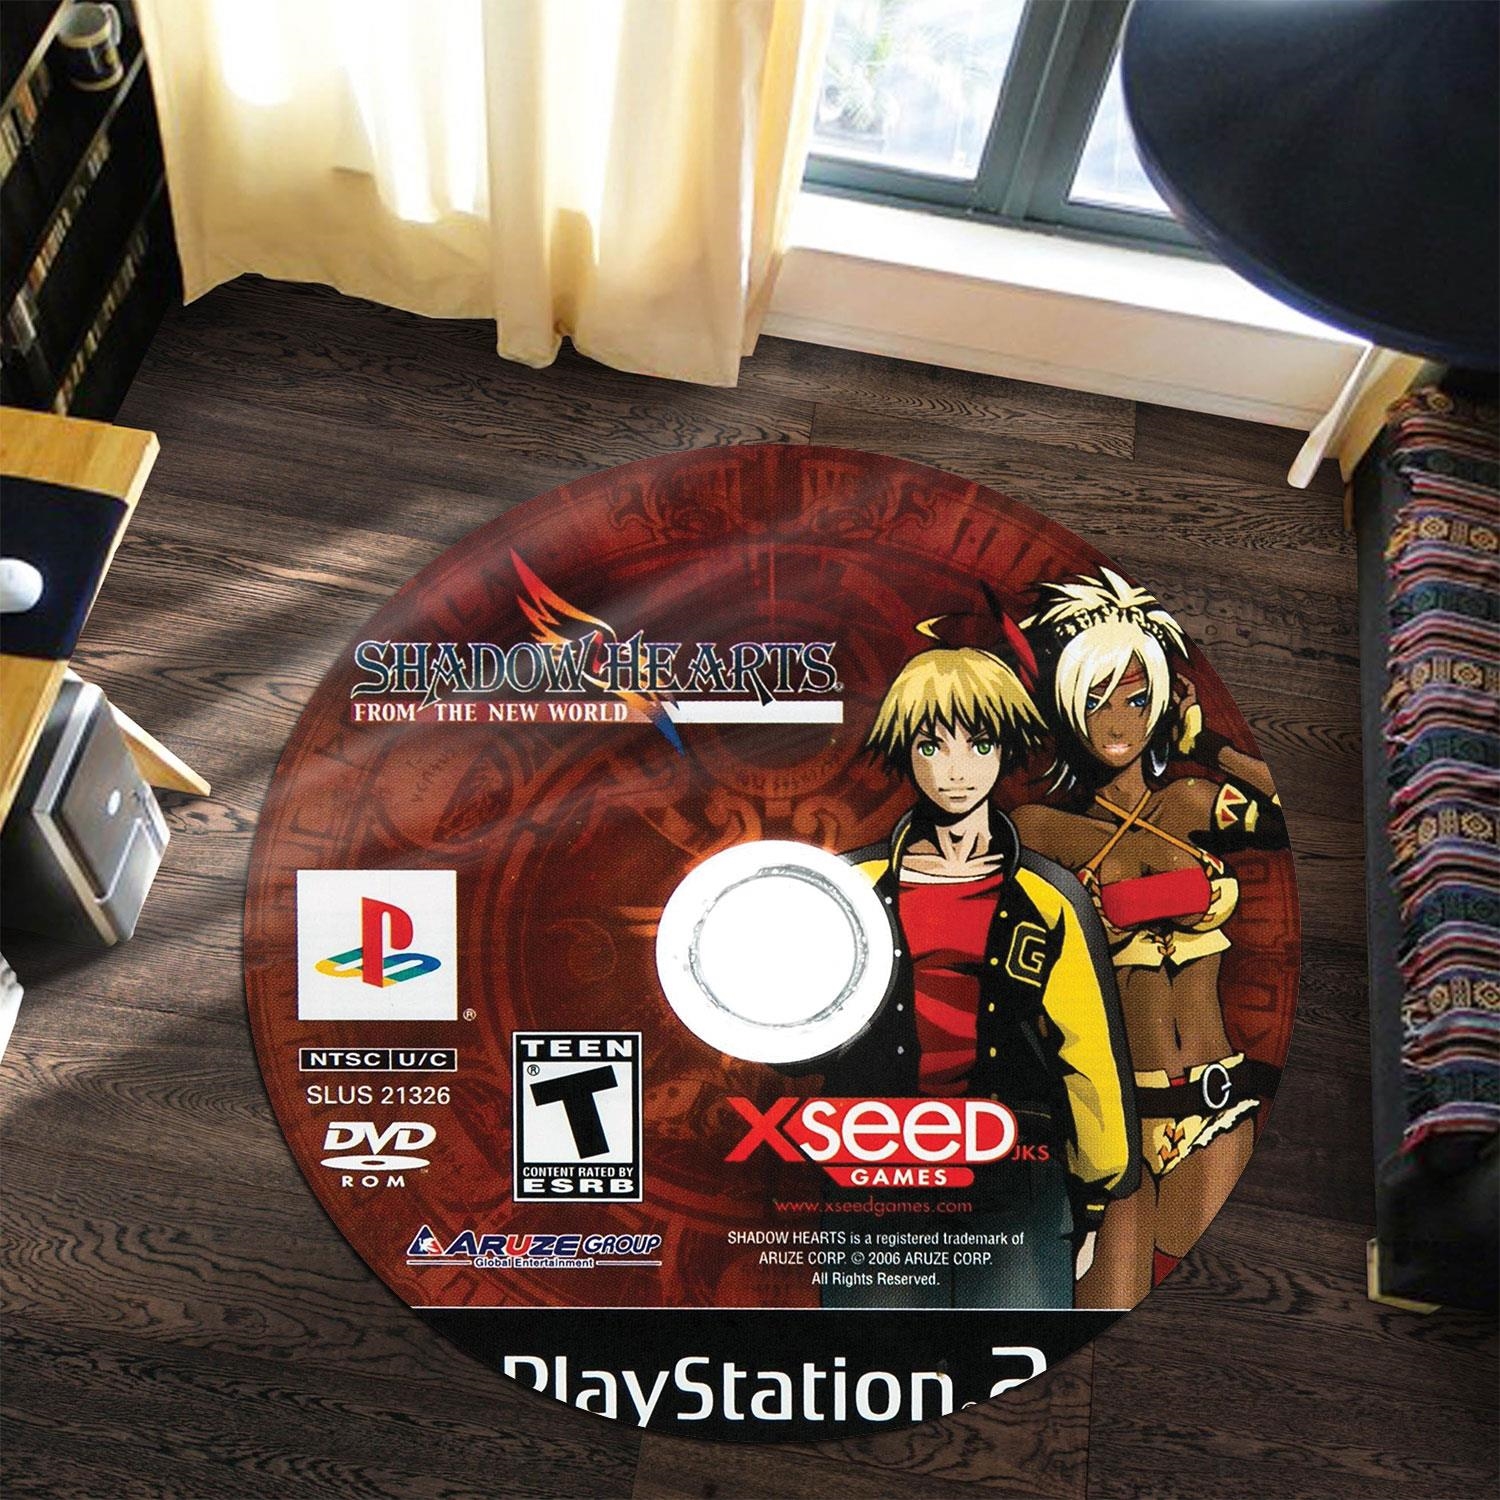 Silent Hill 2 Playstation 2 Disc Round Rug Carpet